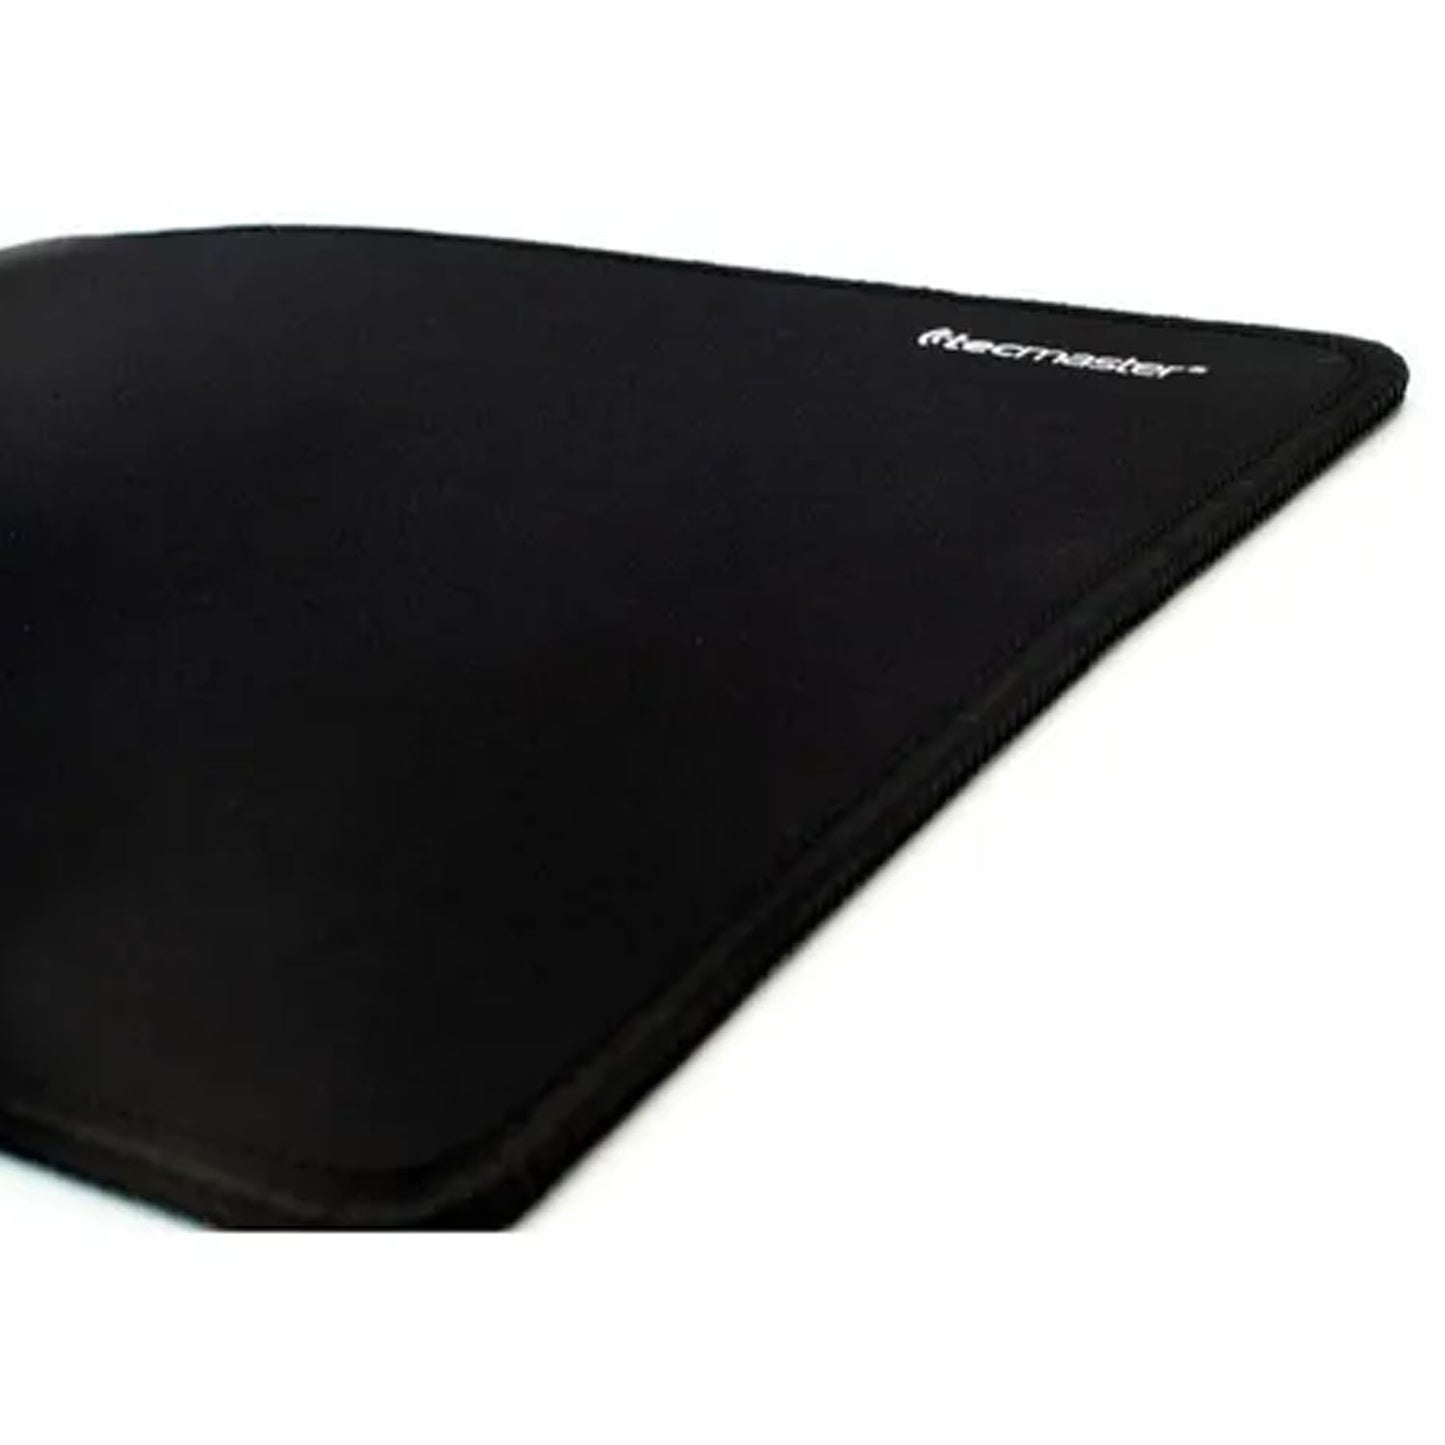 Mousepad 24,5 Cm X 22 Cm Antideslizante Negro TM-100527